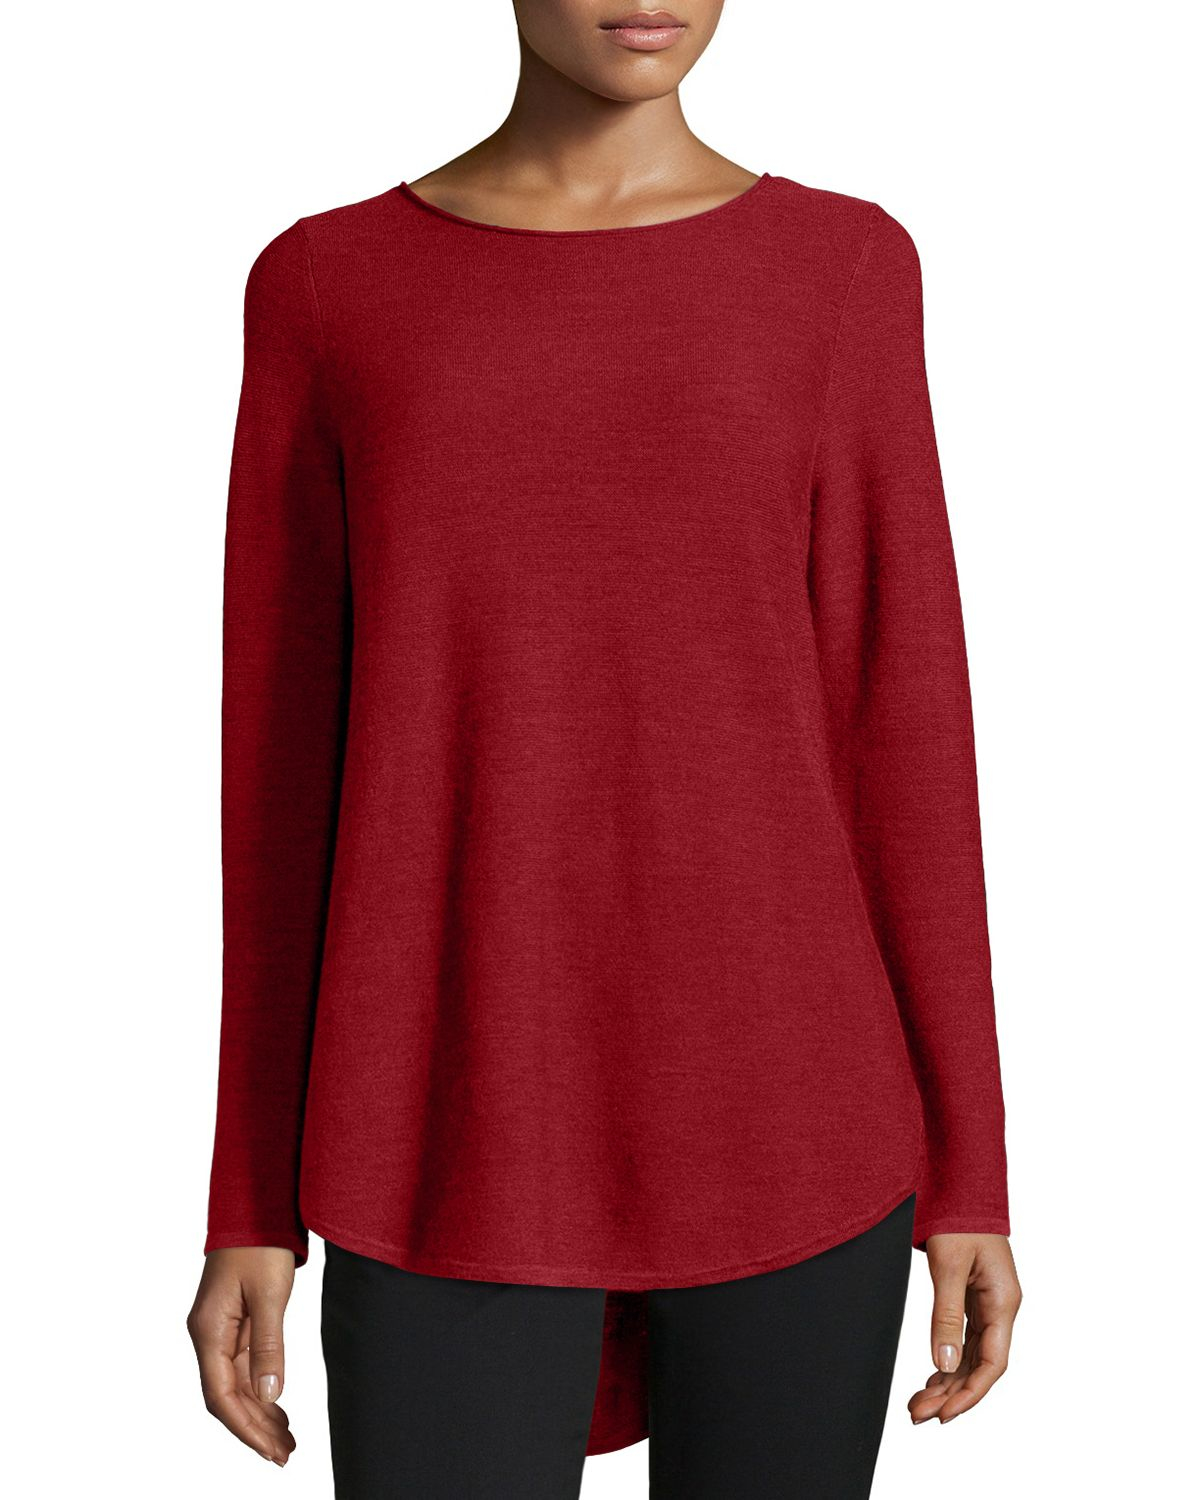 Lyst - Eileen Fisher Long-sleeve Merino Wool Tunic in Red